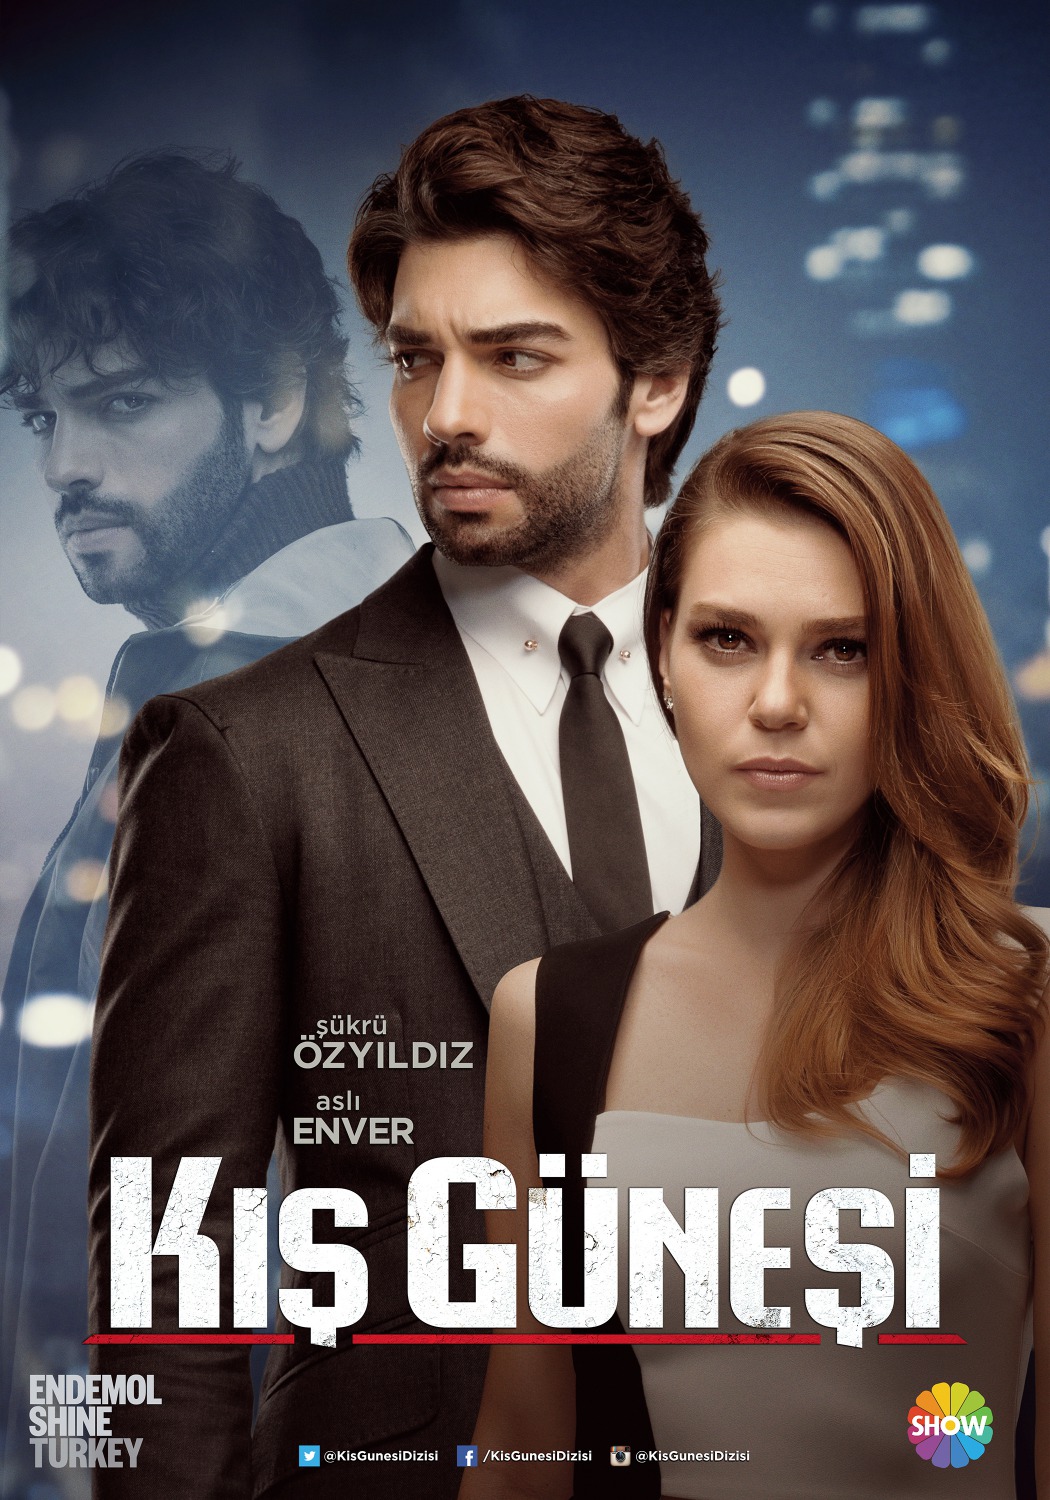 Extra Large TV Poster Image for Kis Gunesi 